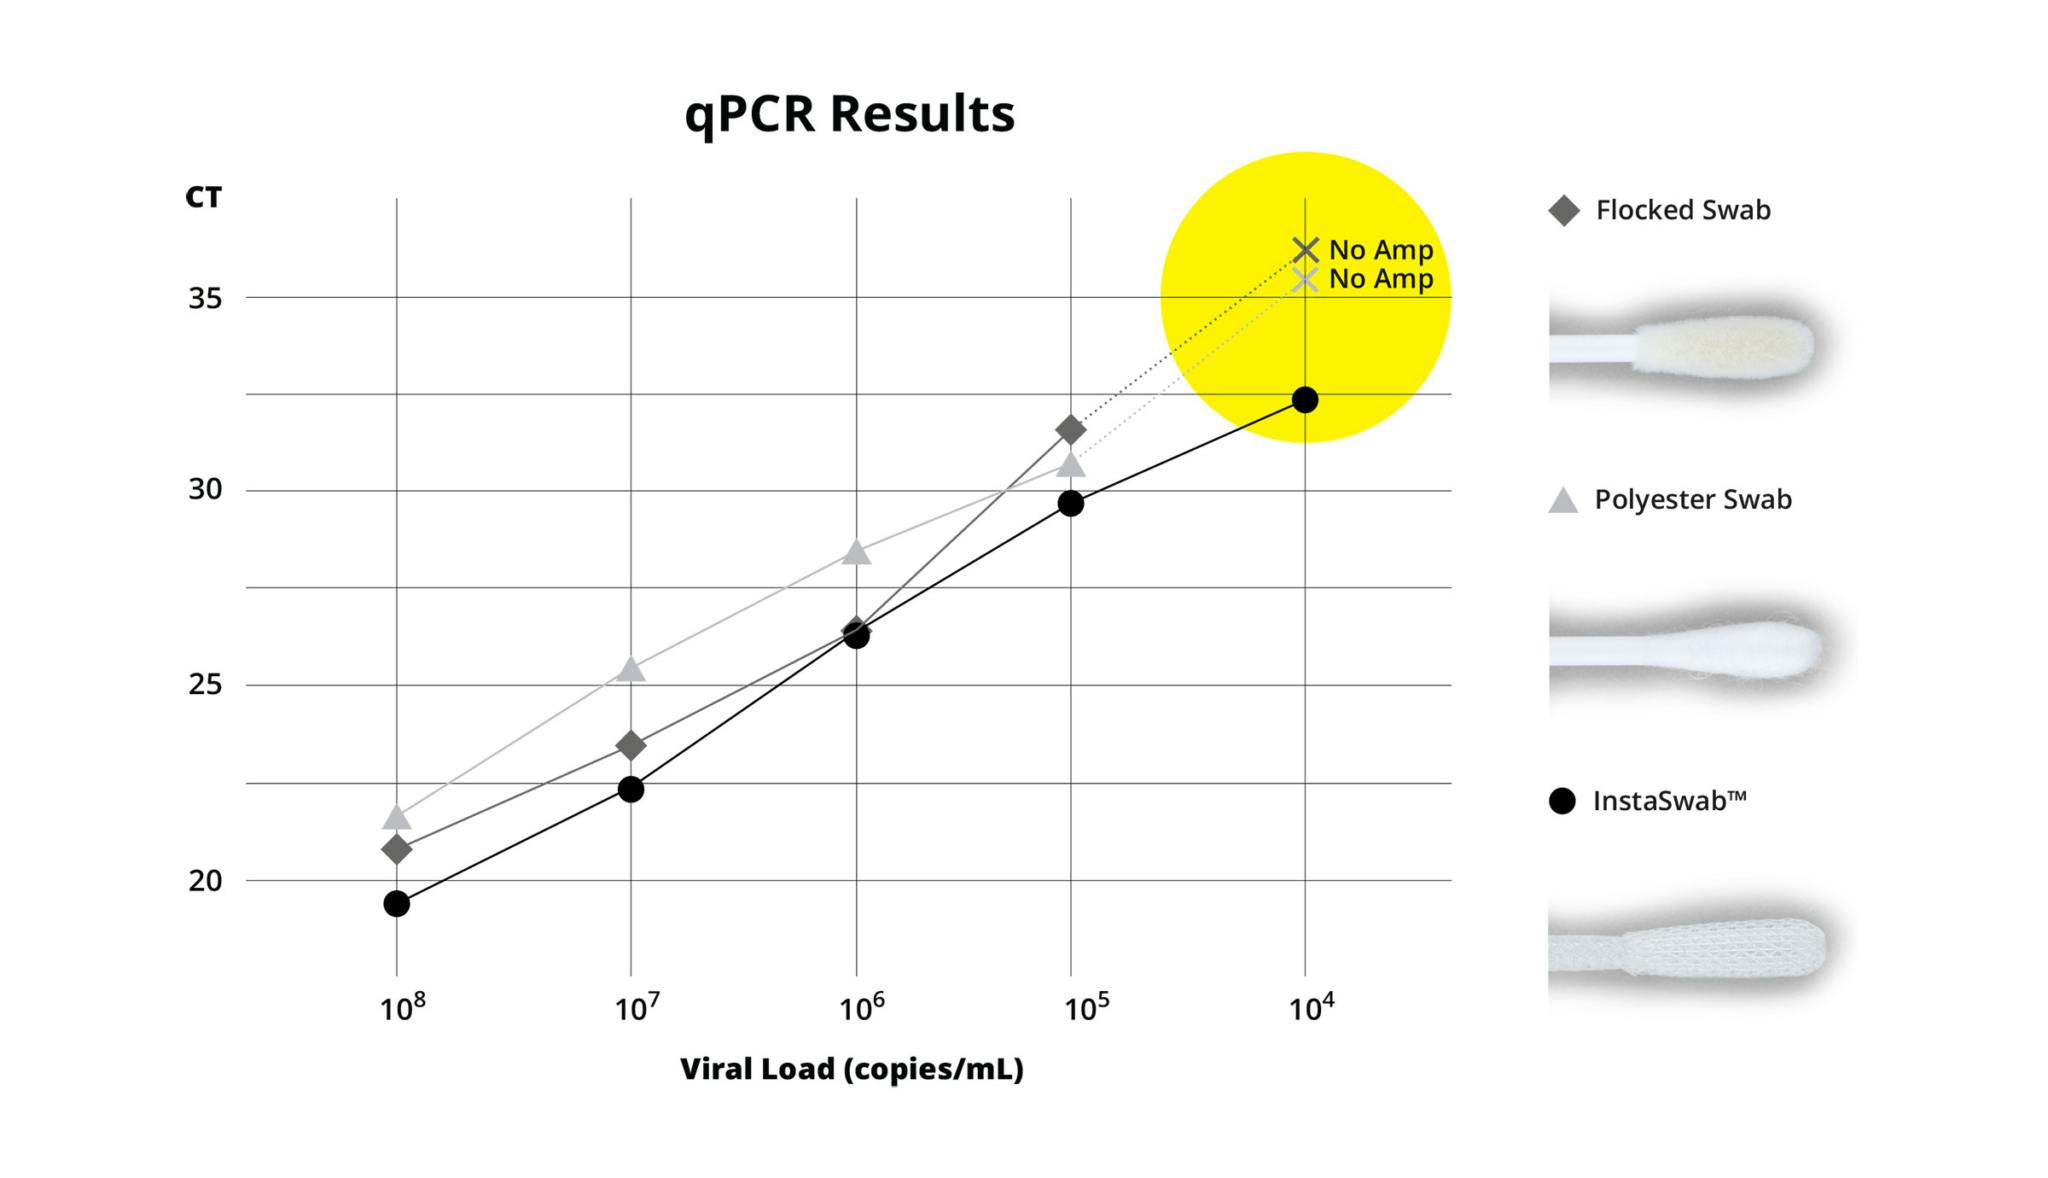 qPCR Viral Load graph for flocked swab, polyester swab and InstaSwab